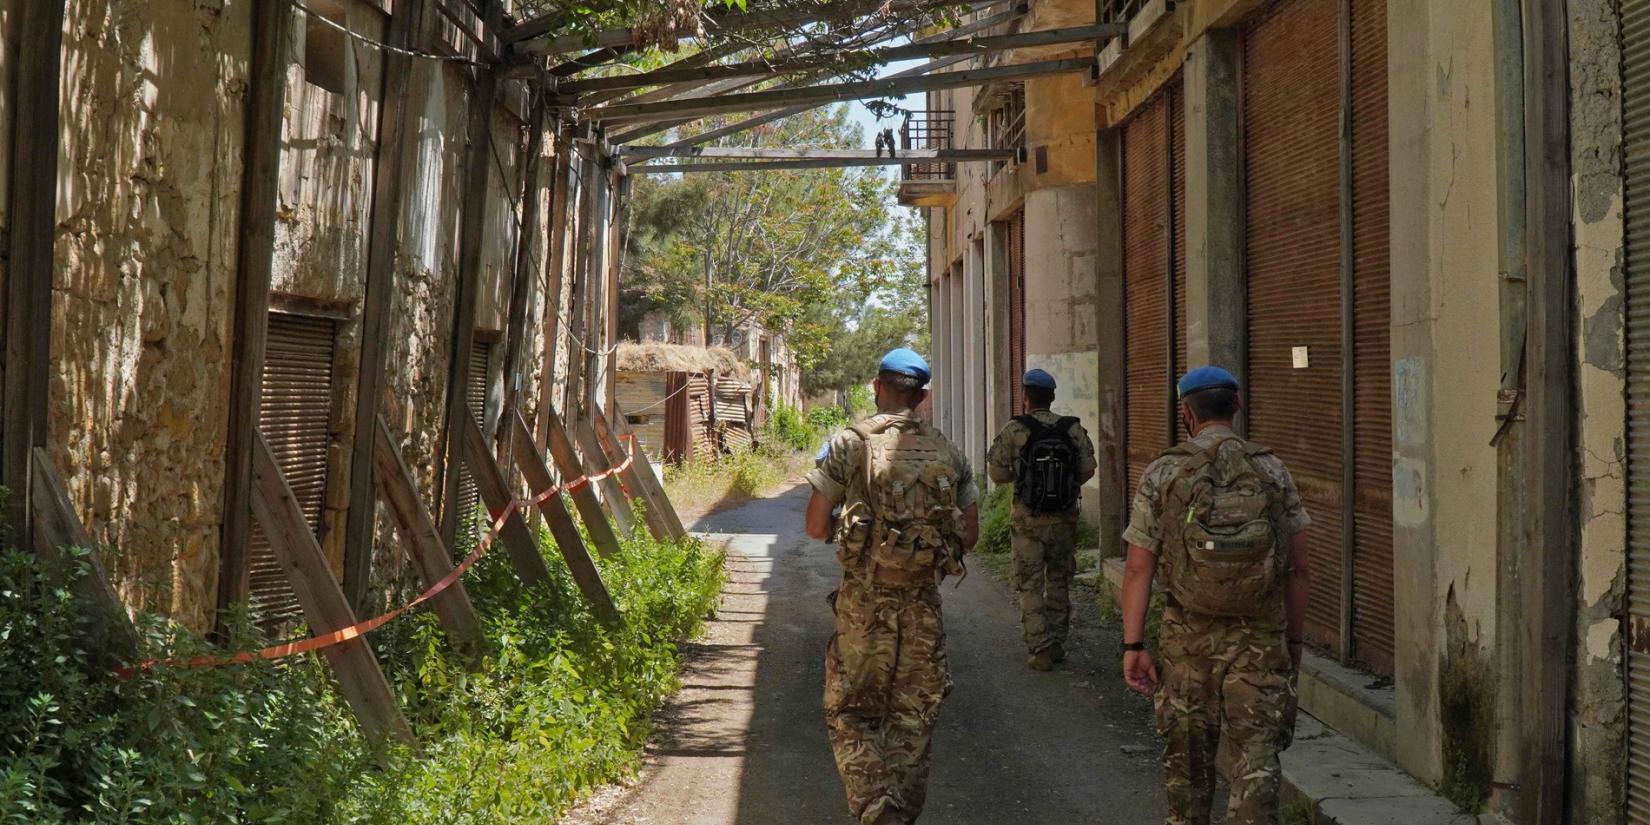 Members of the UN peacekeeping force UNFICYP walk through an alley between dilapidated buildings in the buffer zone.